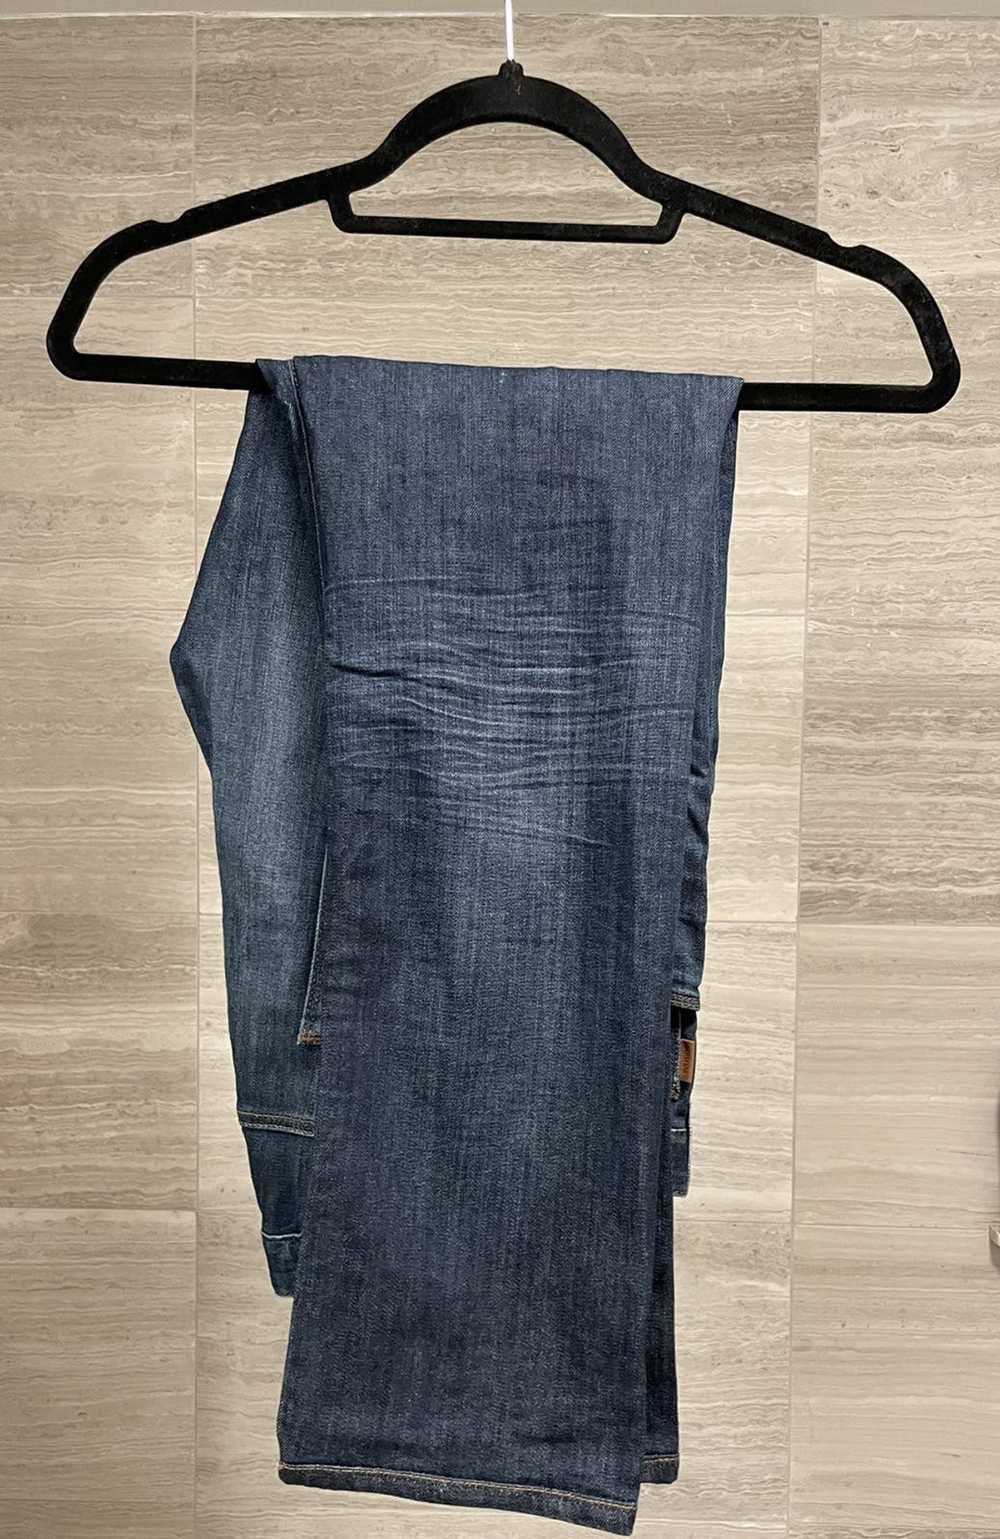 Armani Armani Slim Fit Blue Jeans Size 32/32 - image 1